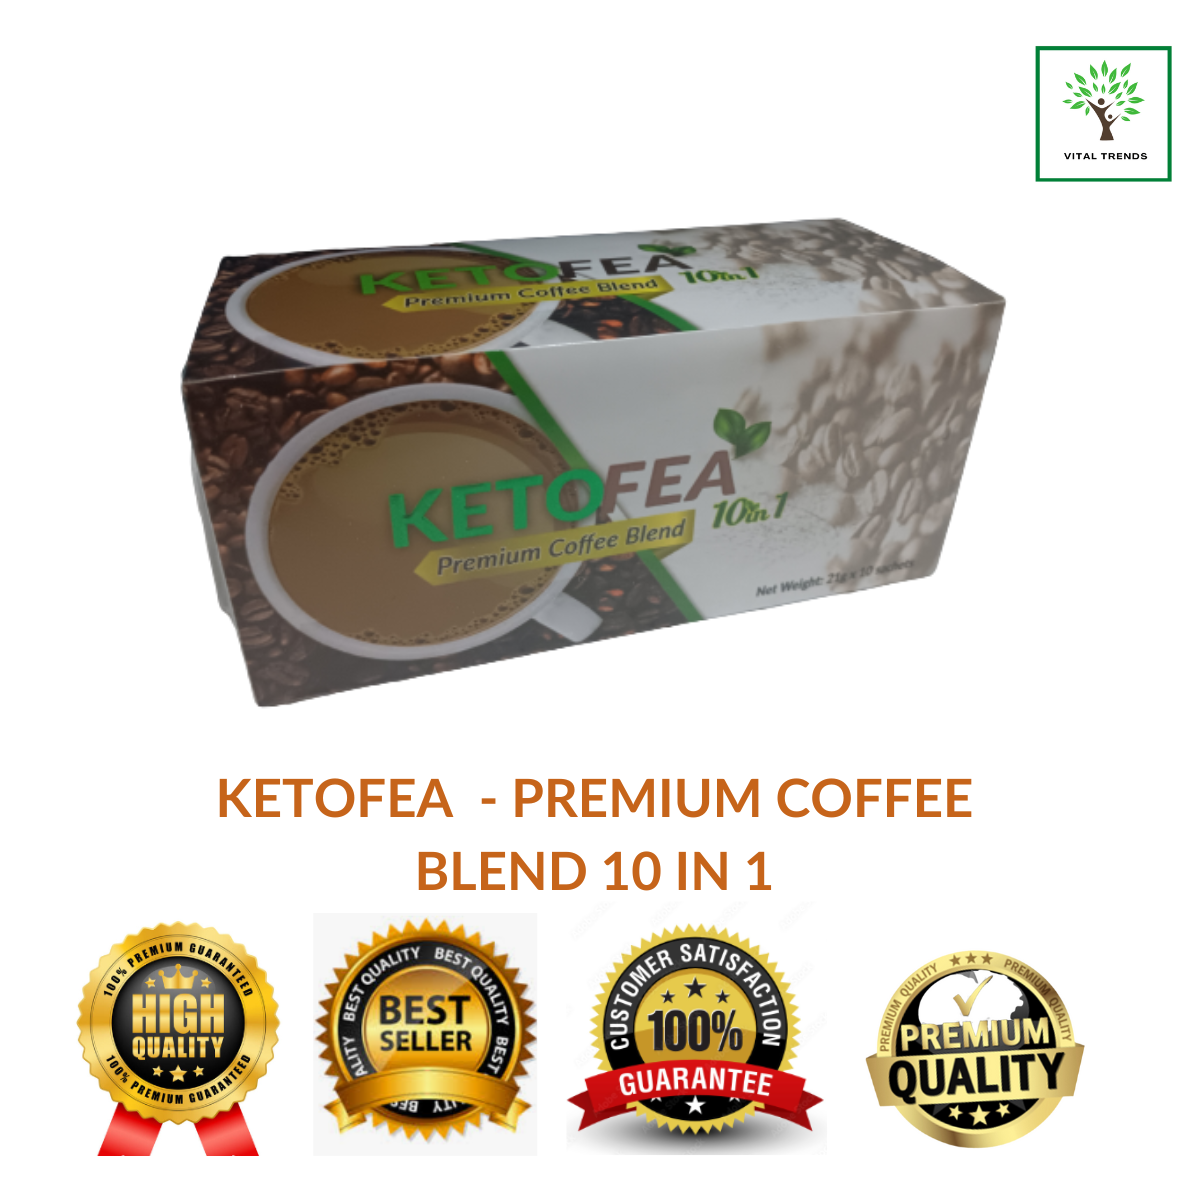 KETOFEA PREMIUM BLEND COFFEE 10 IN 1 HEALTHY ORGANIC KETOGENIC DRINK COFFEE